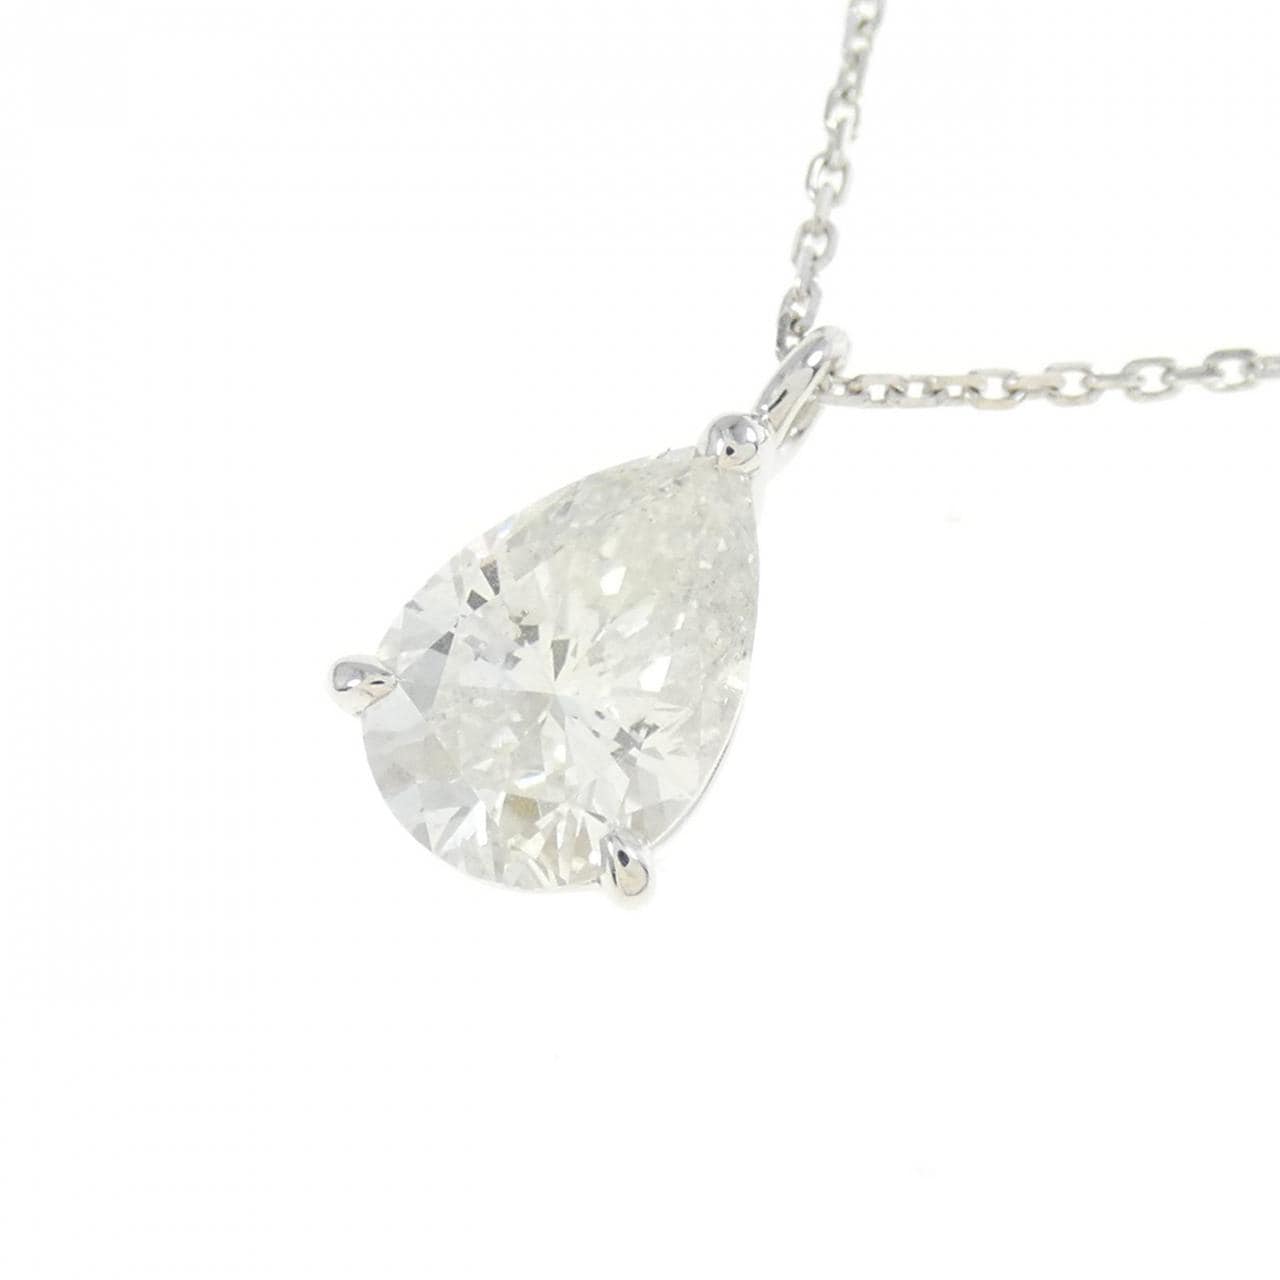 K18WG Diamond necklace 1.372CT H SI2 pear shape